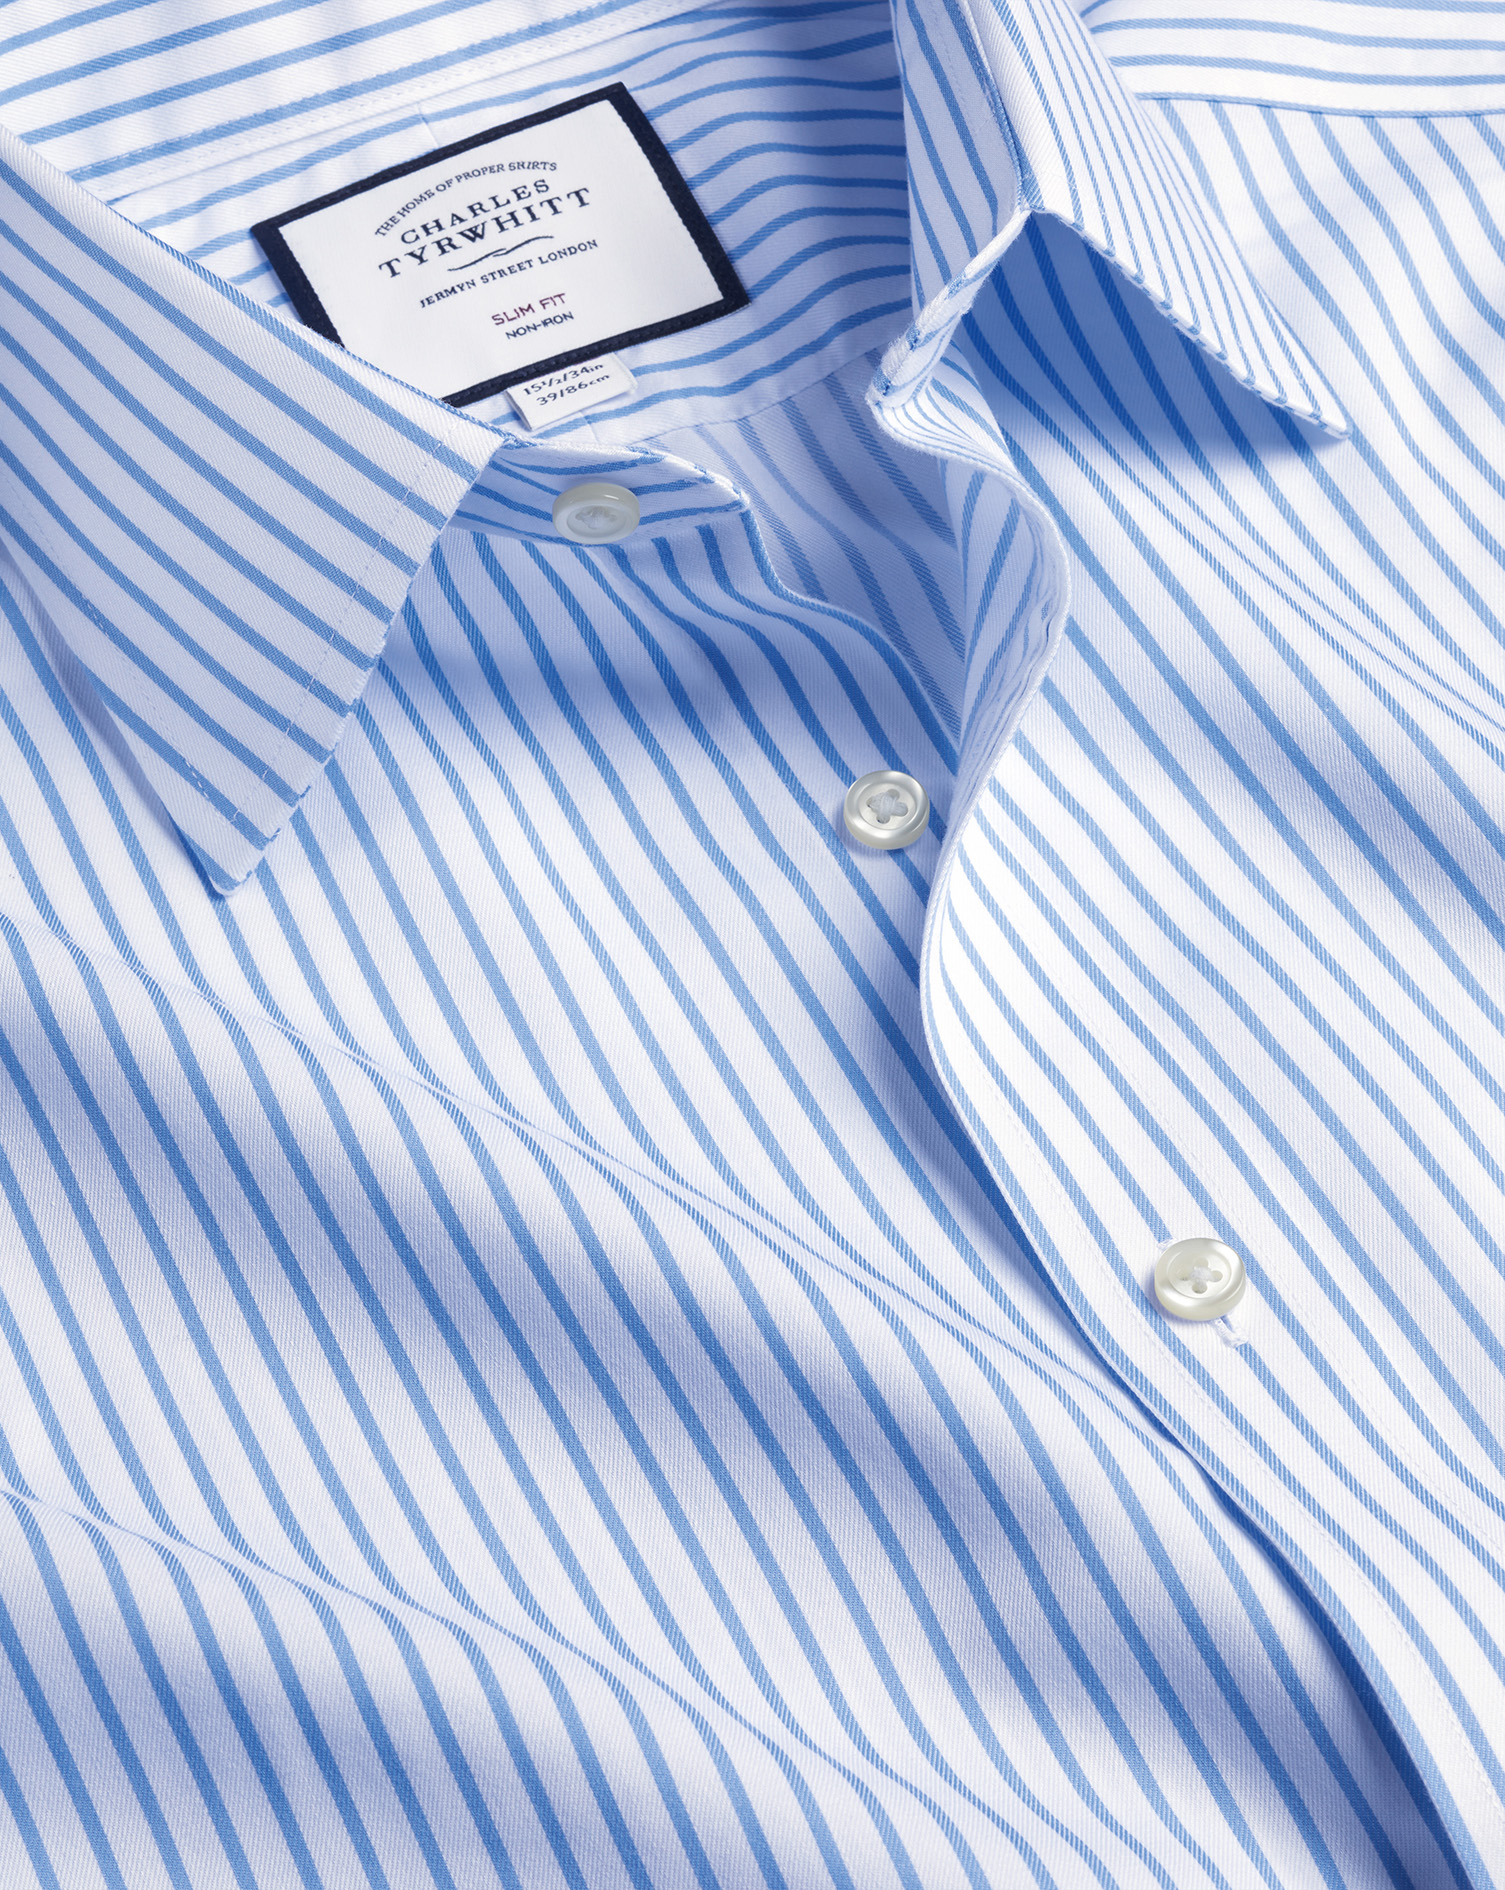 Men's Charles Tyrwhitt Non-Iron Twill Stripe Dress Shirt - Cornflower Blue French Cuff Size XXL Cott